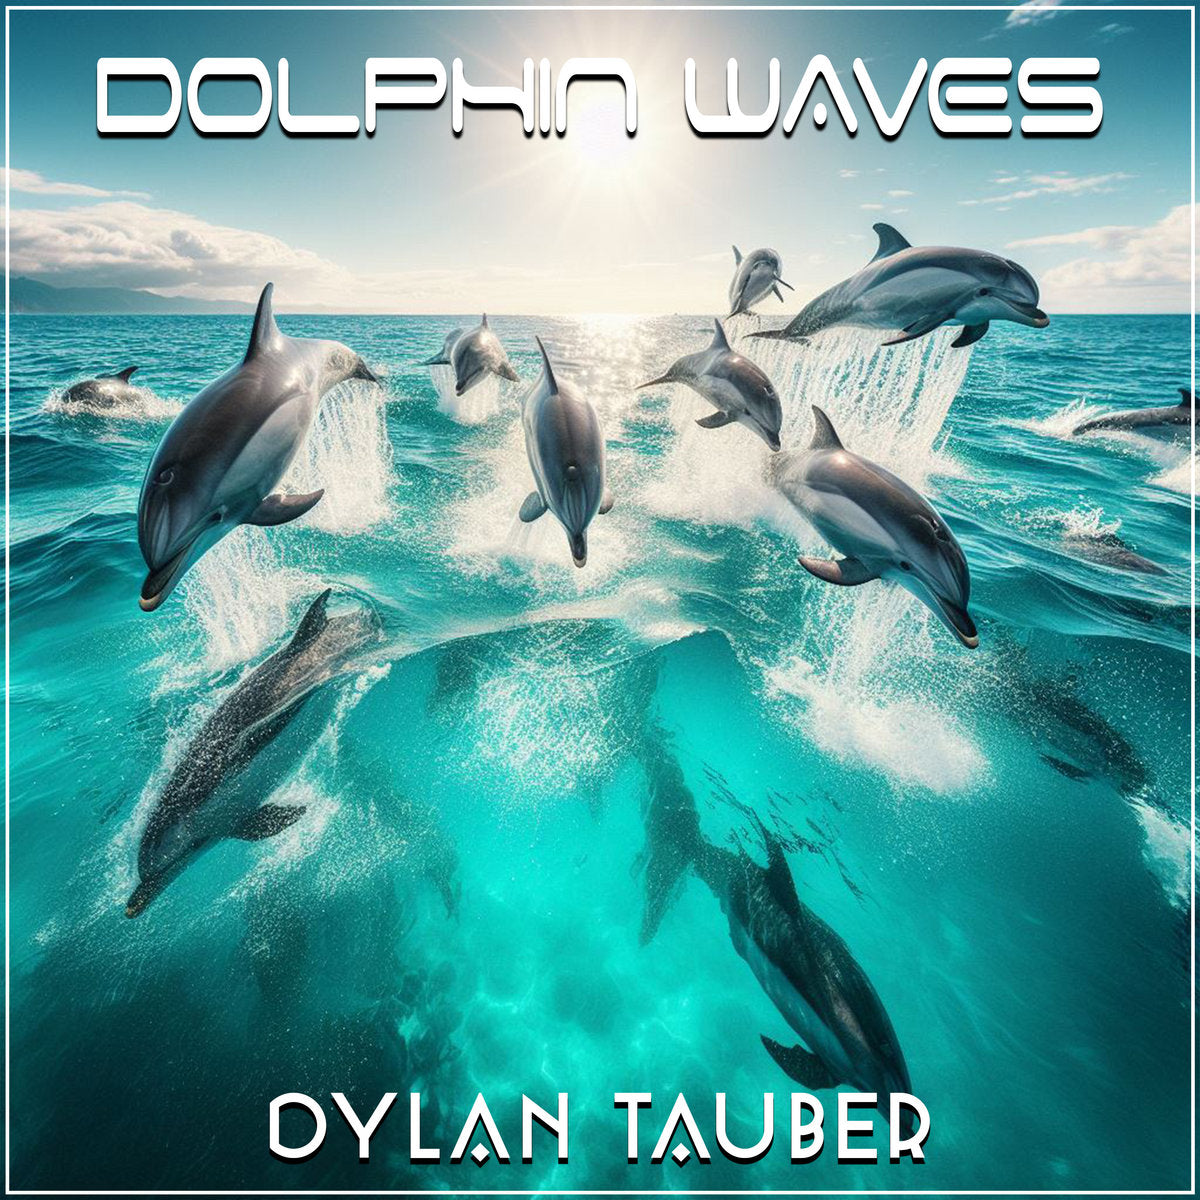 Award winning artist Dylan Tauber returns with eighteenth album ‘Dolphin Waves’